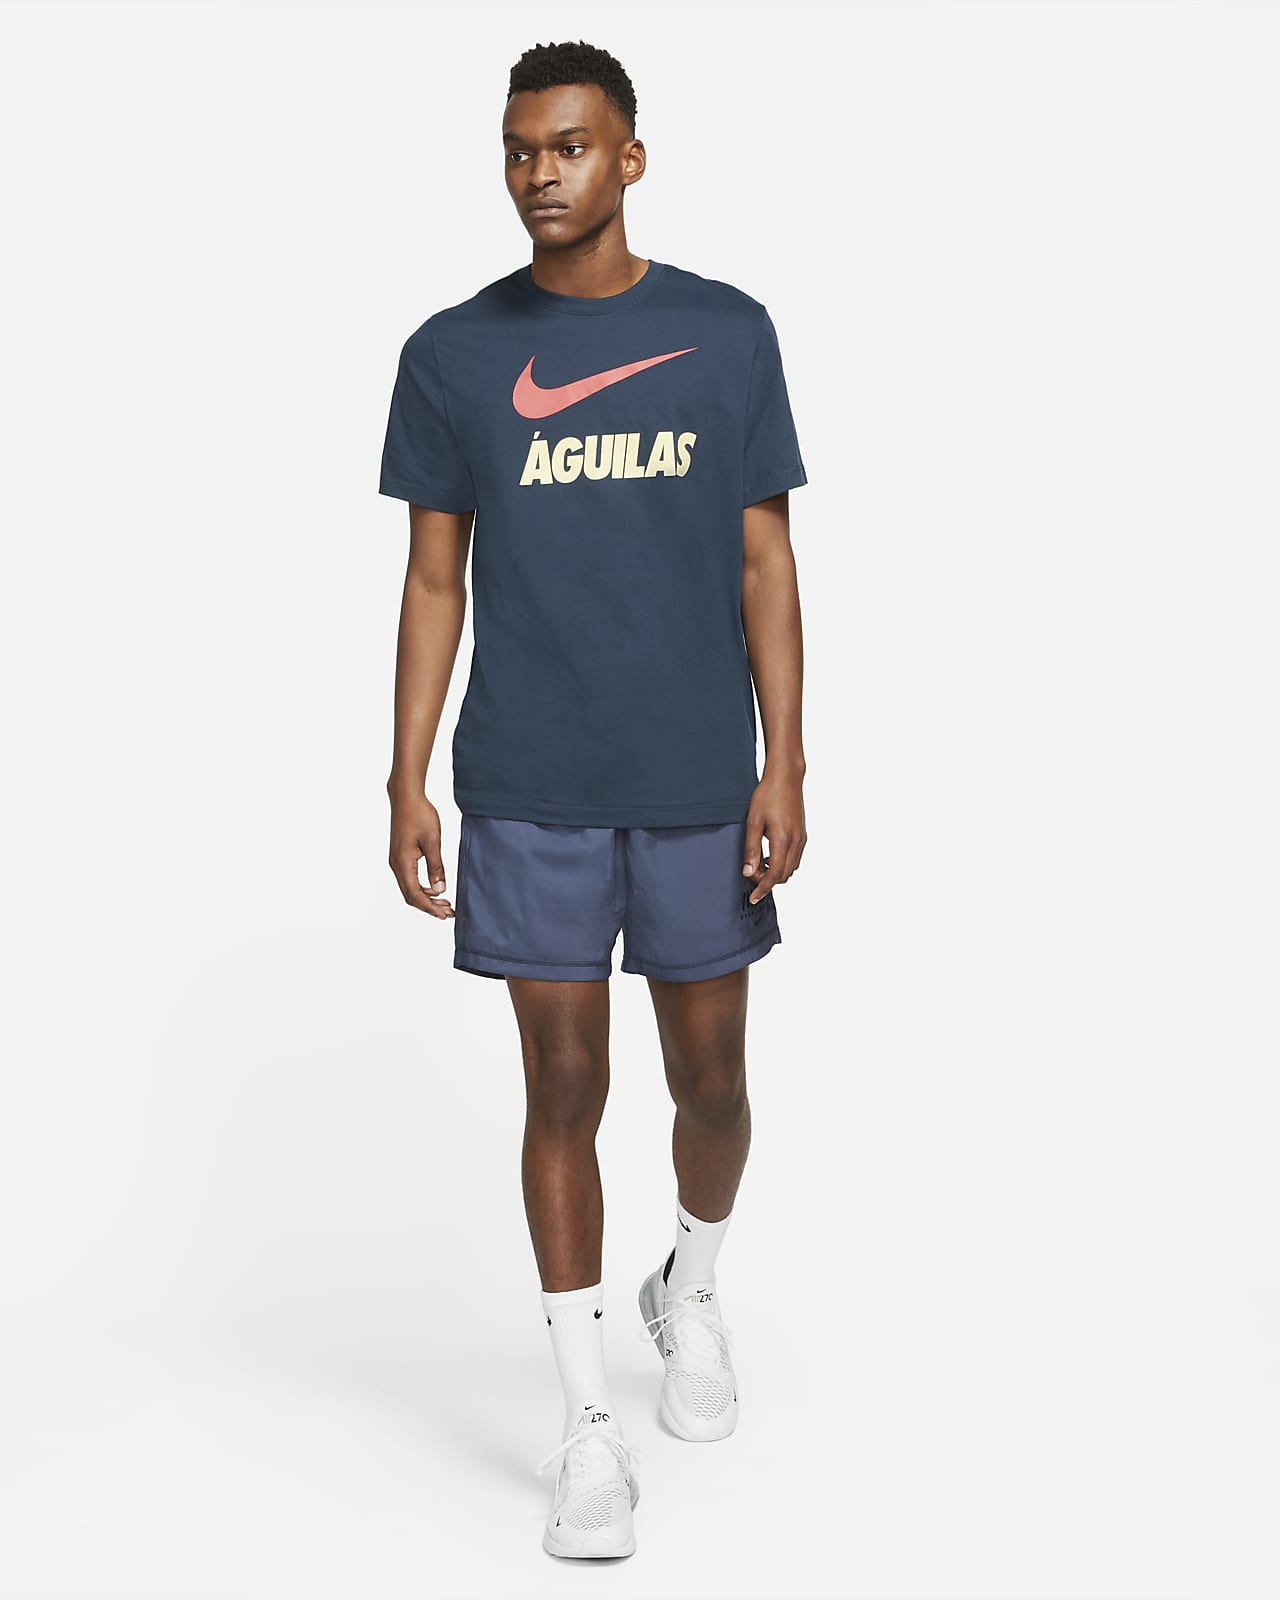 Nike америка. Nike Tennis t Shirt 2021. Nike America.